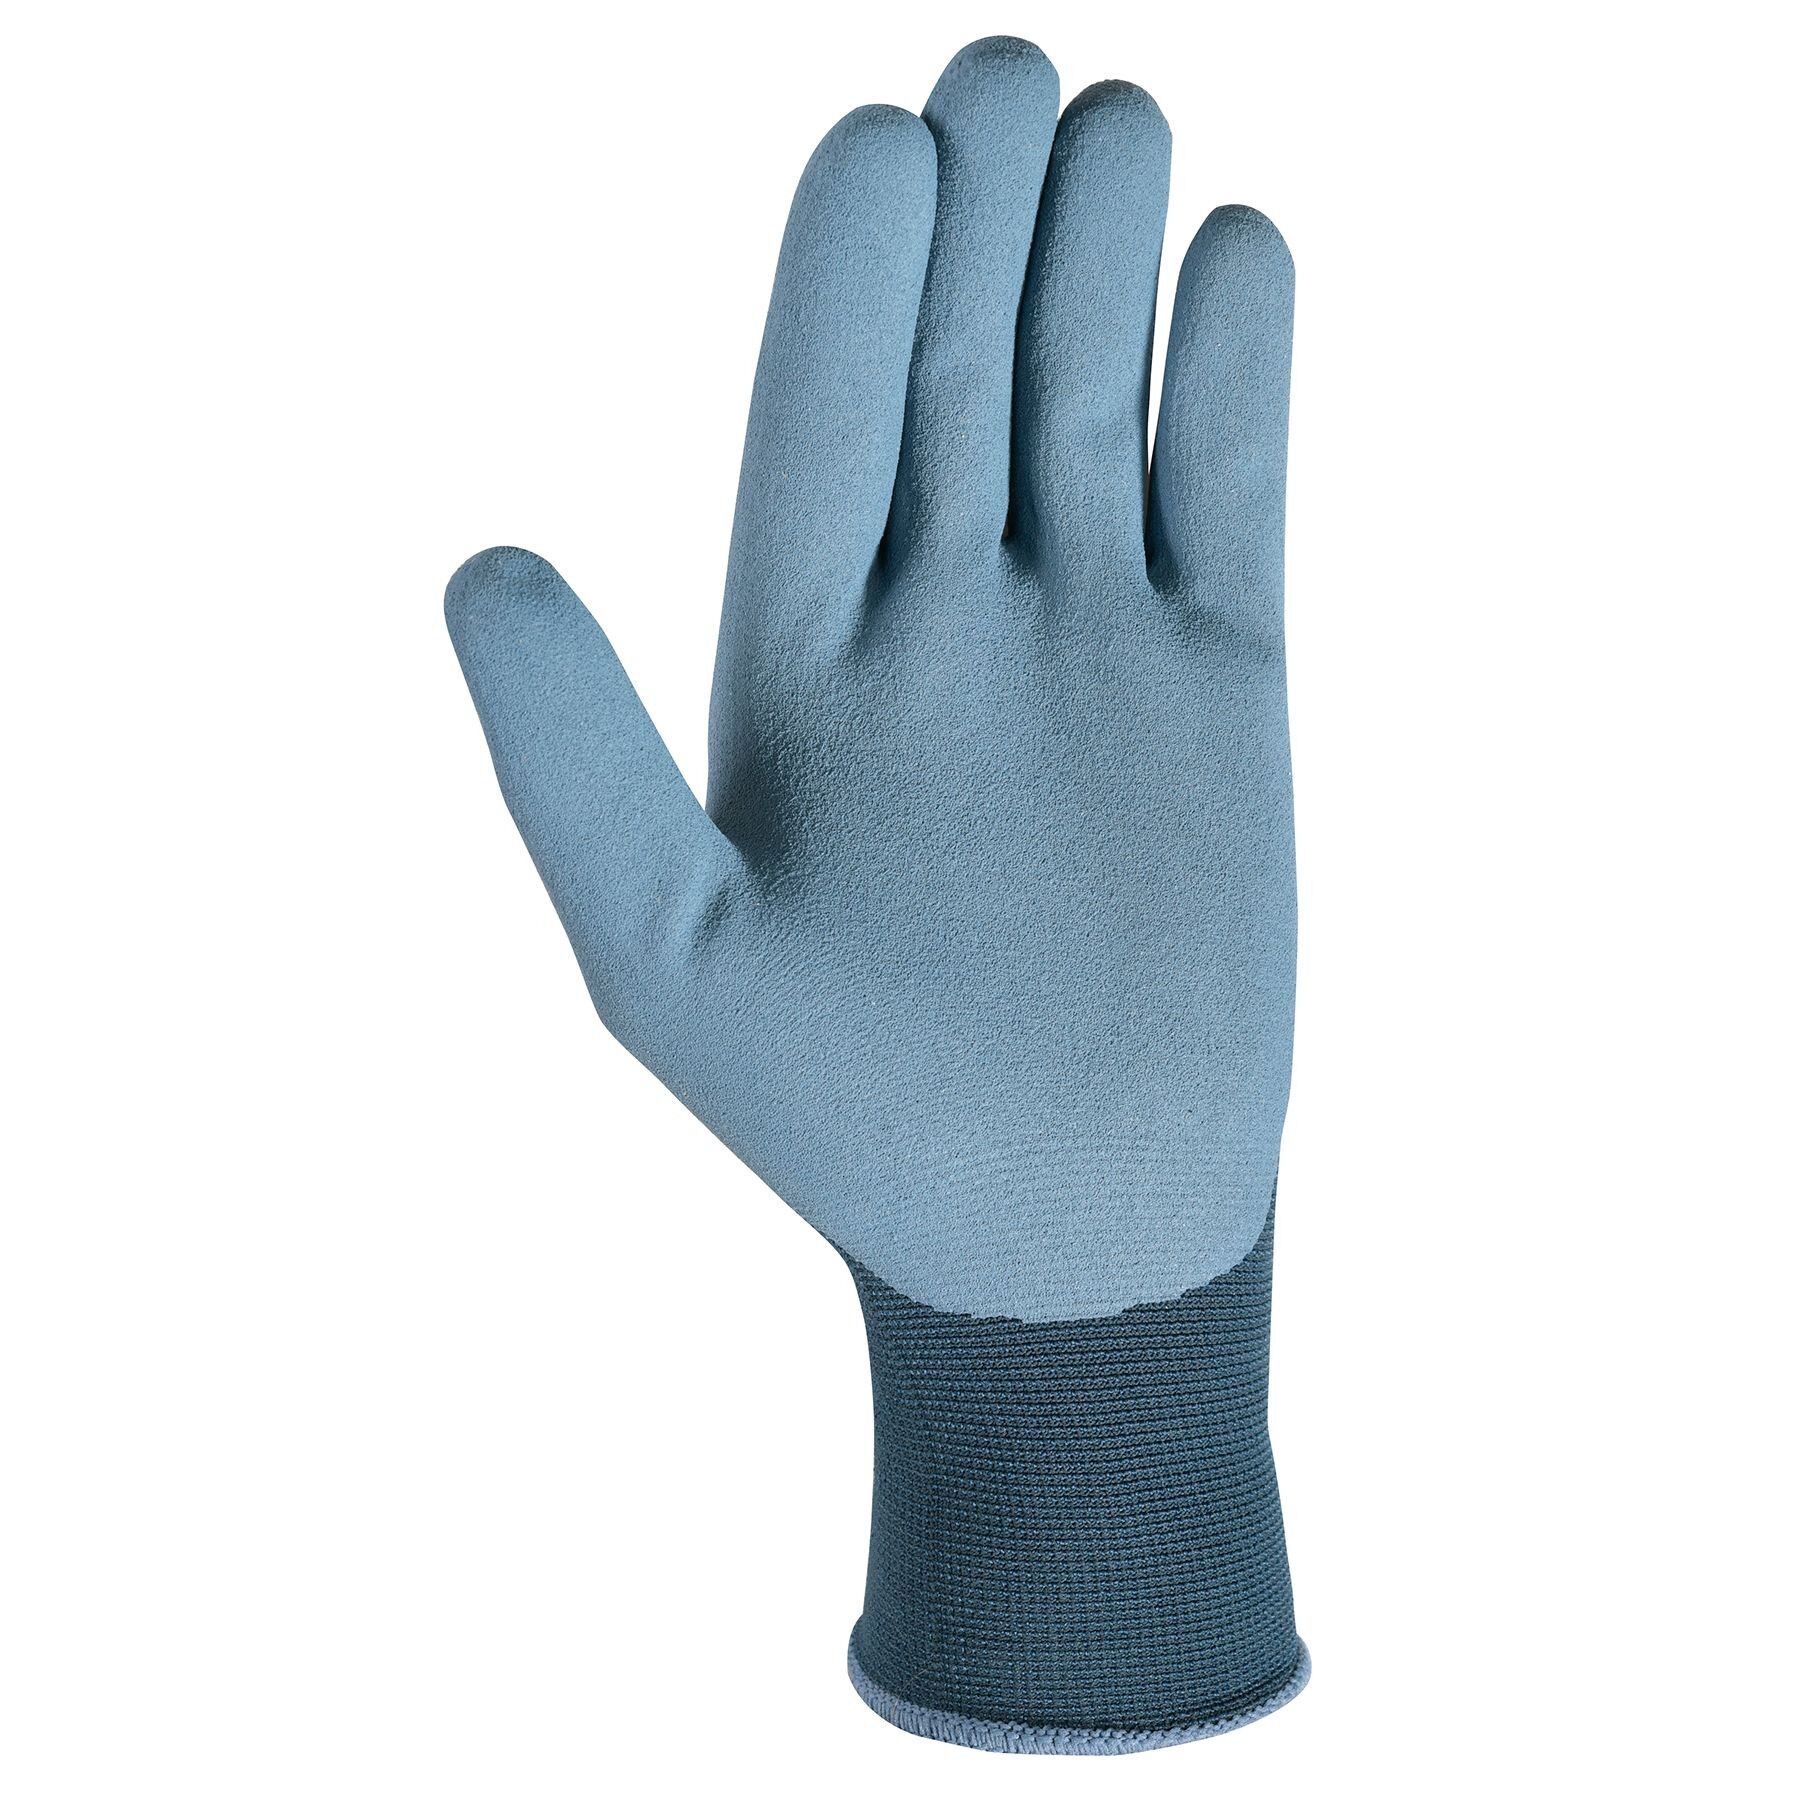 Men's FX3 Nitrile Micro-Foam Coated Grip Gloves